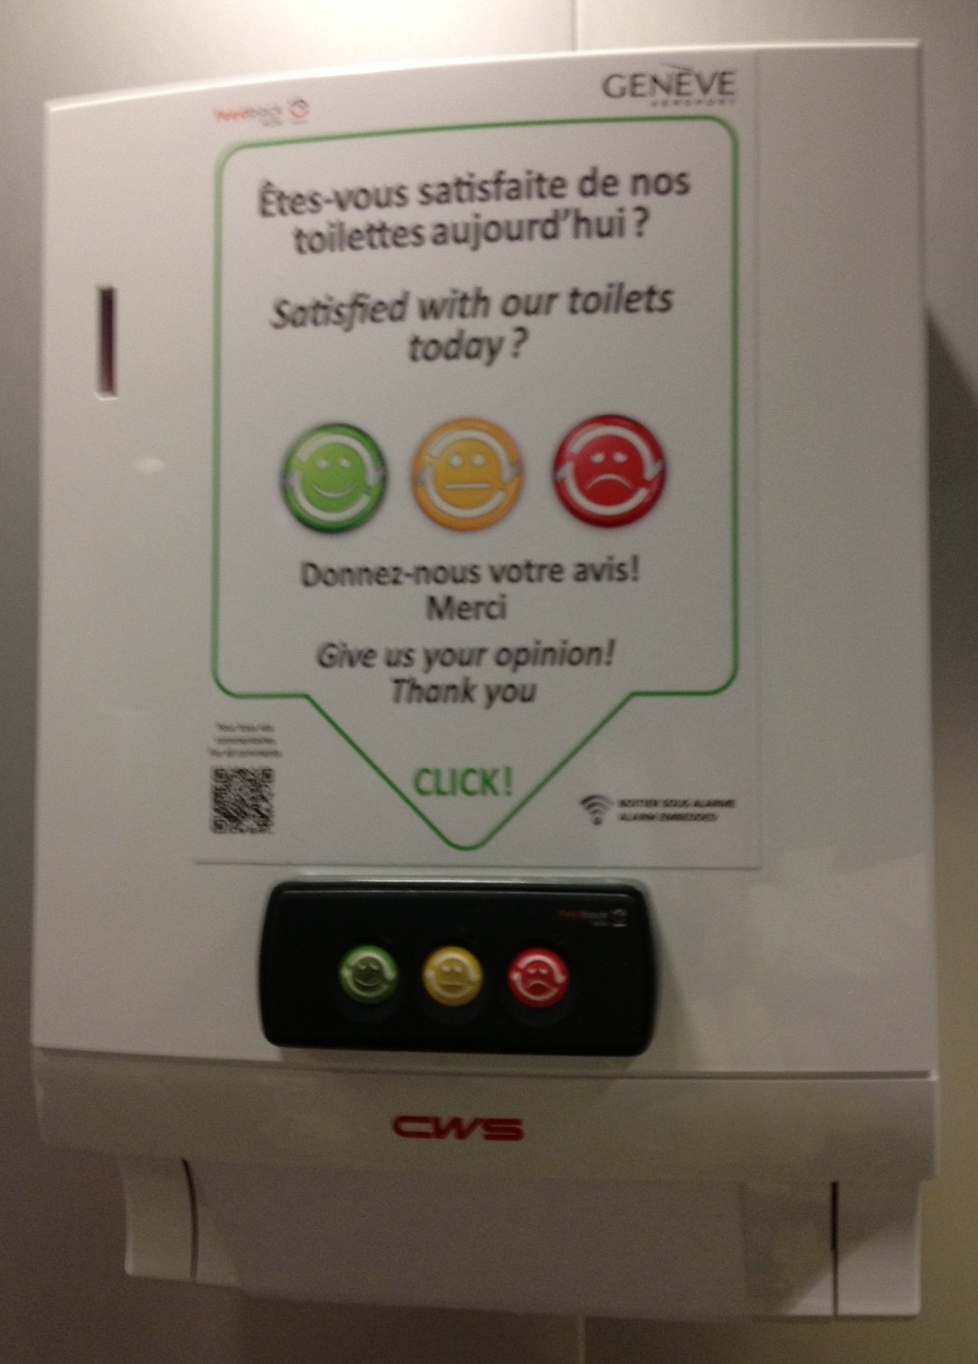 Geneva airport customer feedback